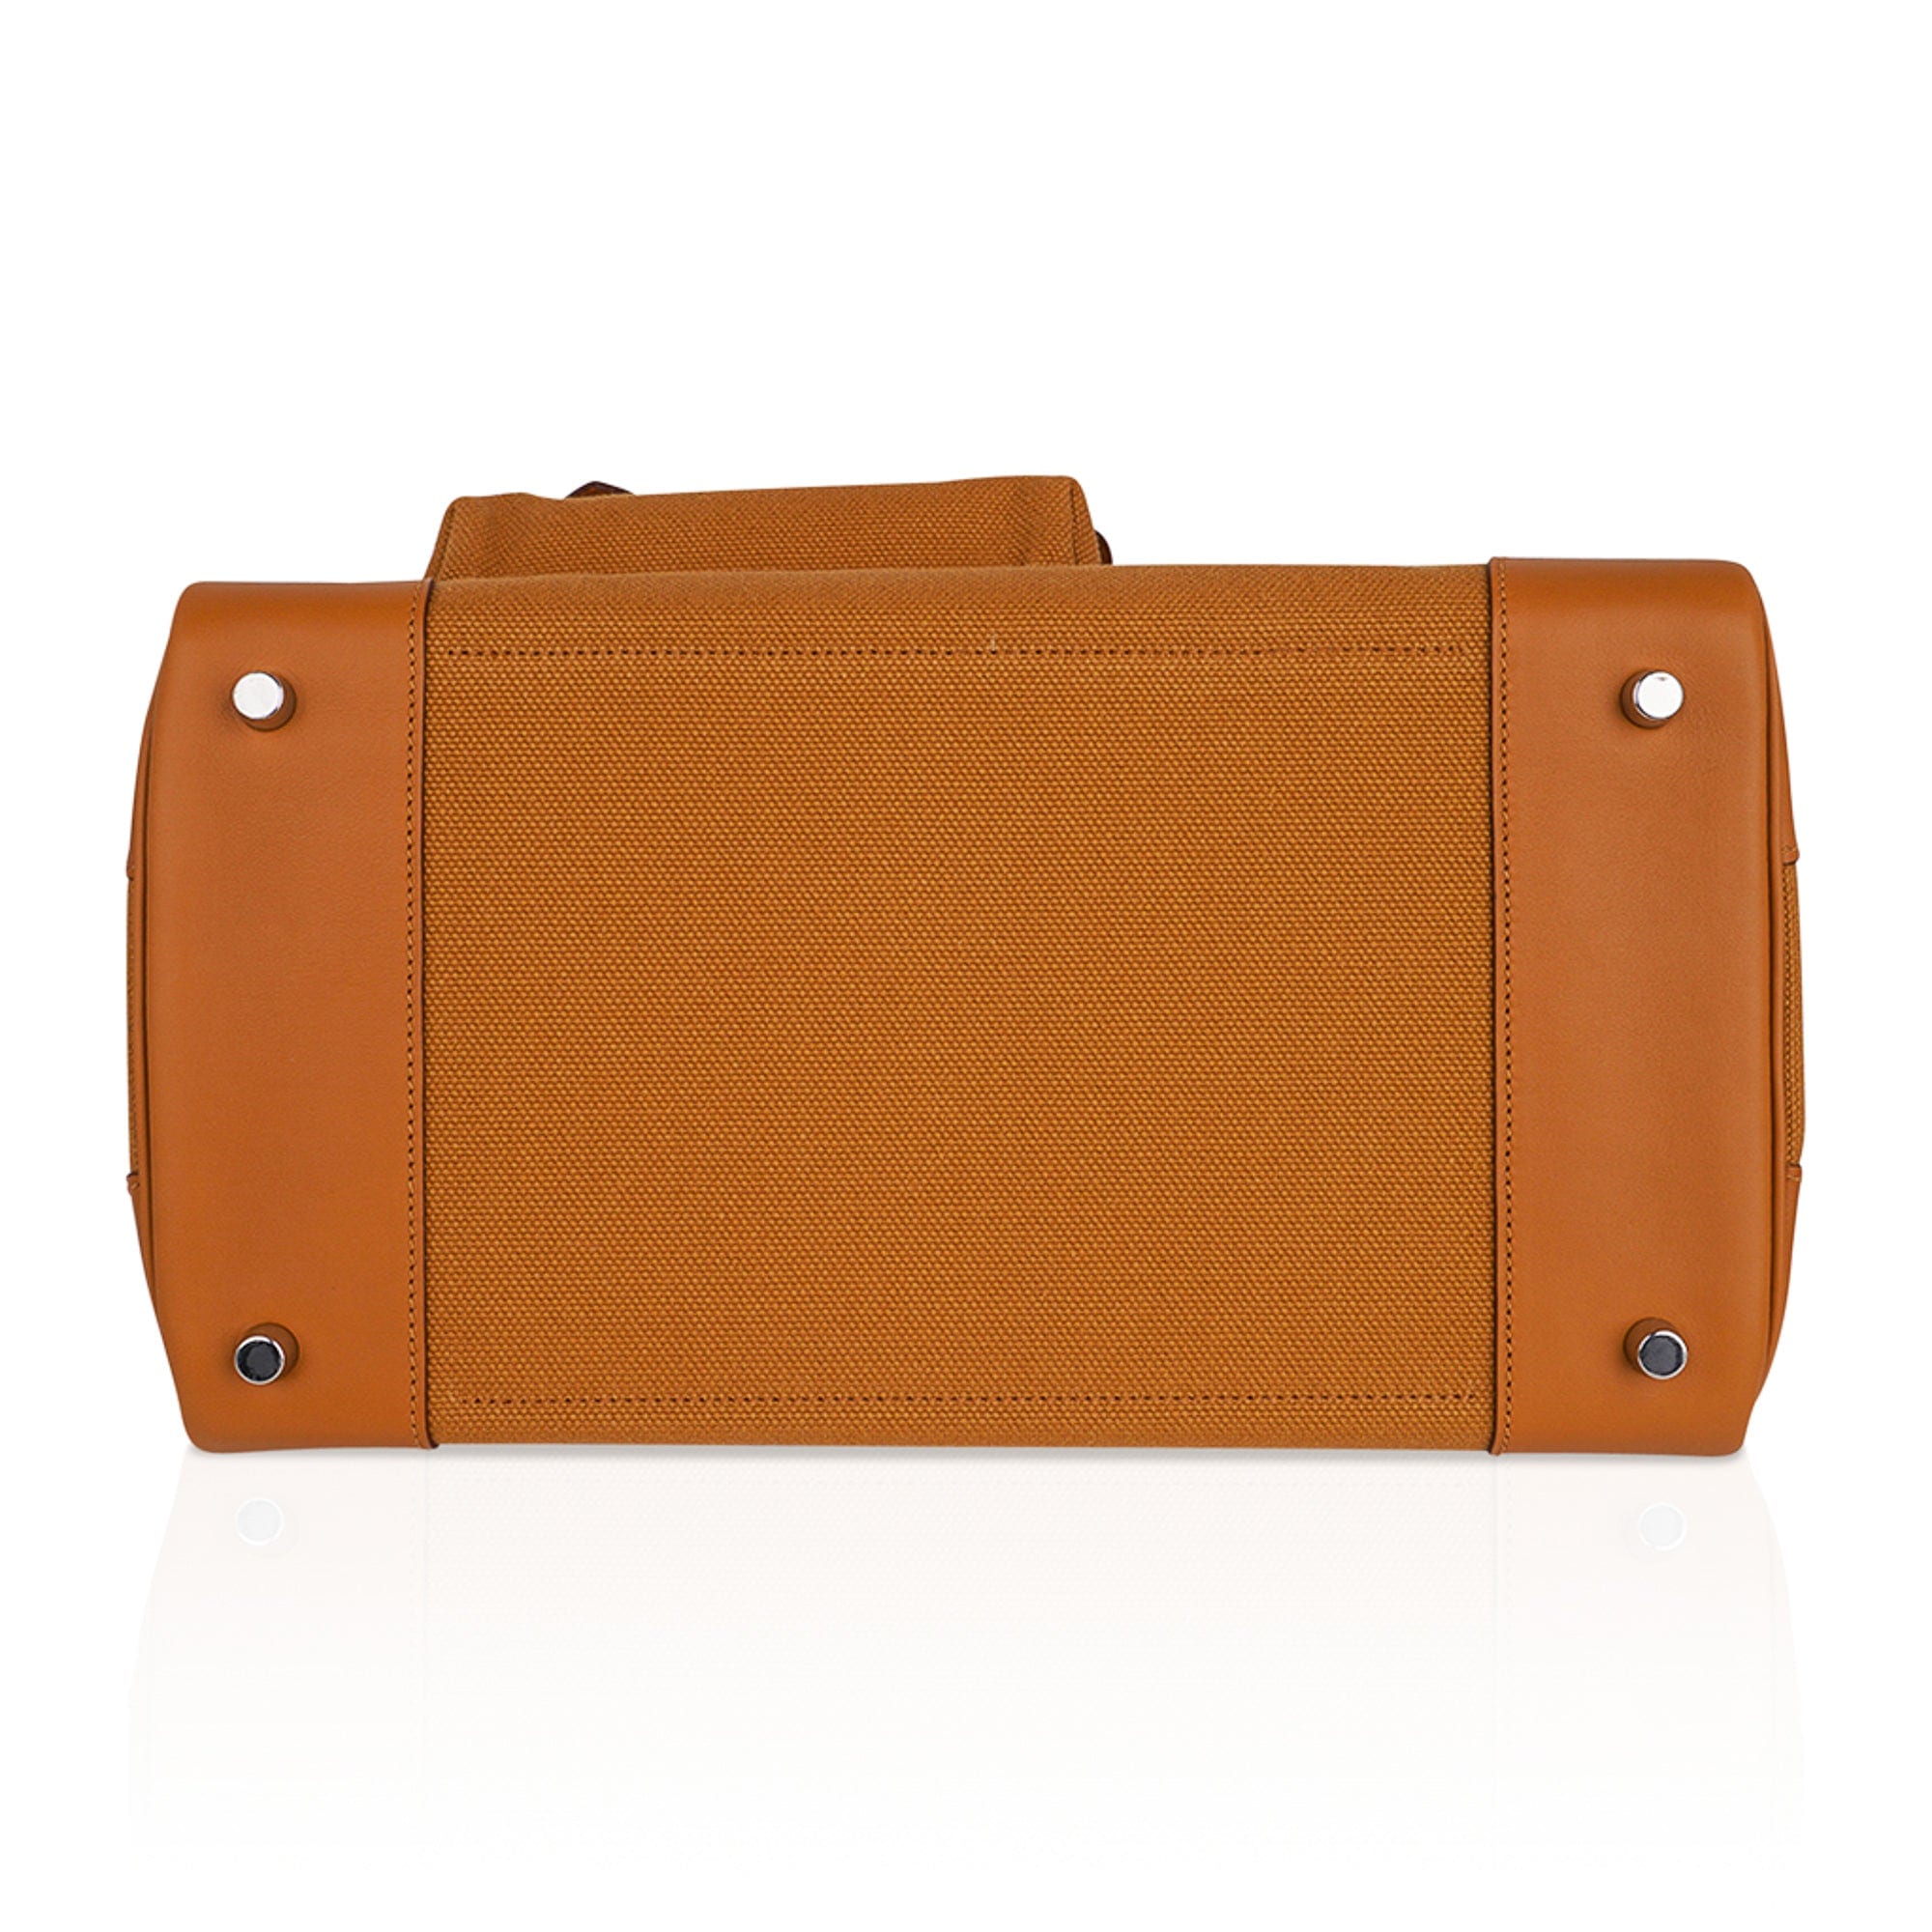 Hermes Birkin Cargo Toile Goeland Swift 35 Bag Leather Trim Limited Edition